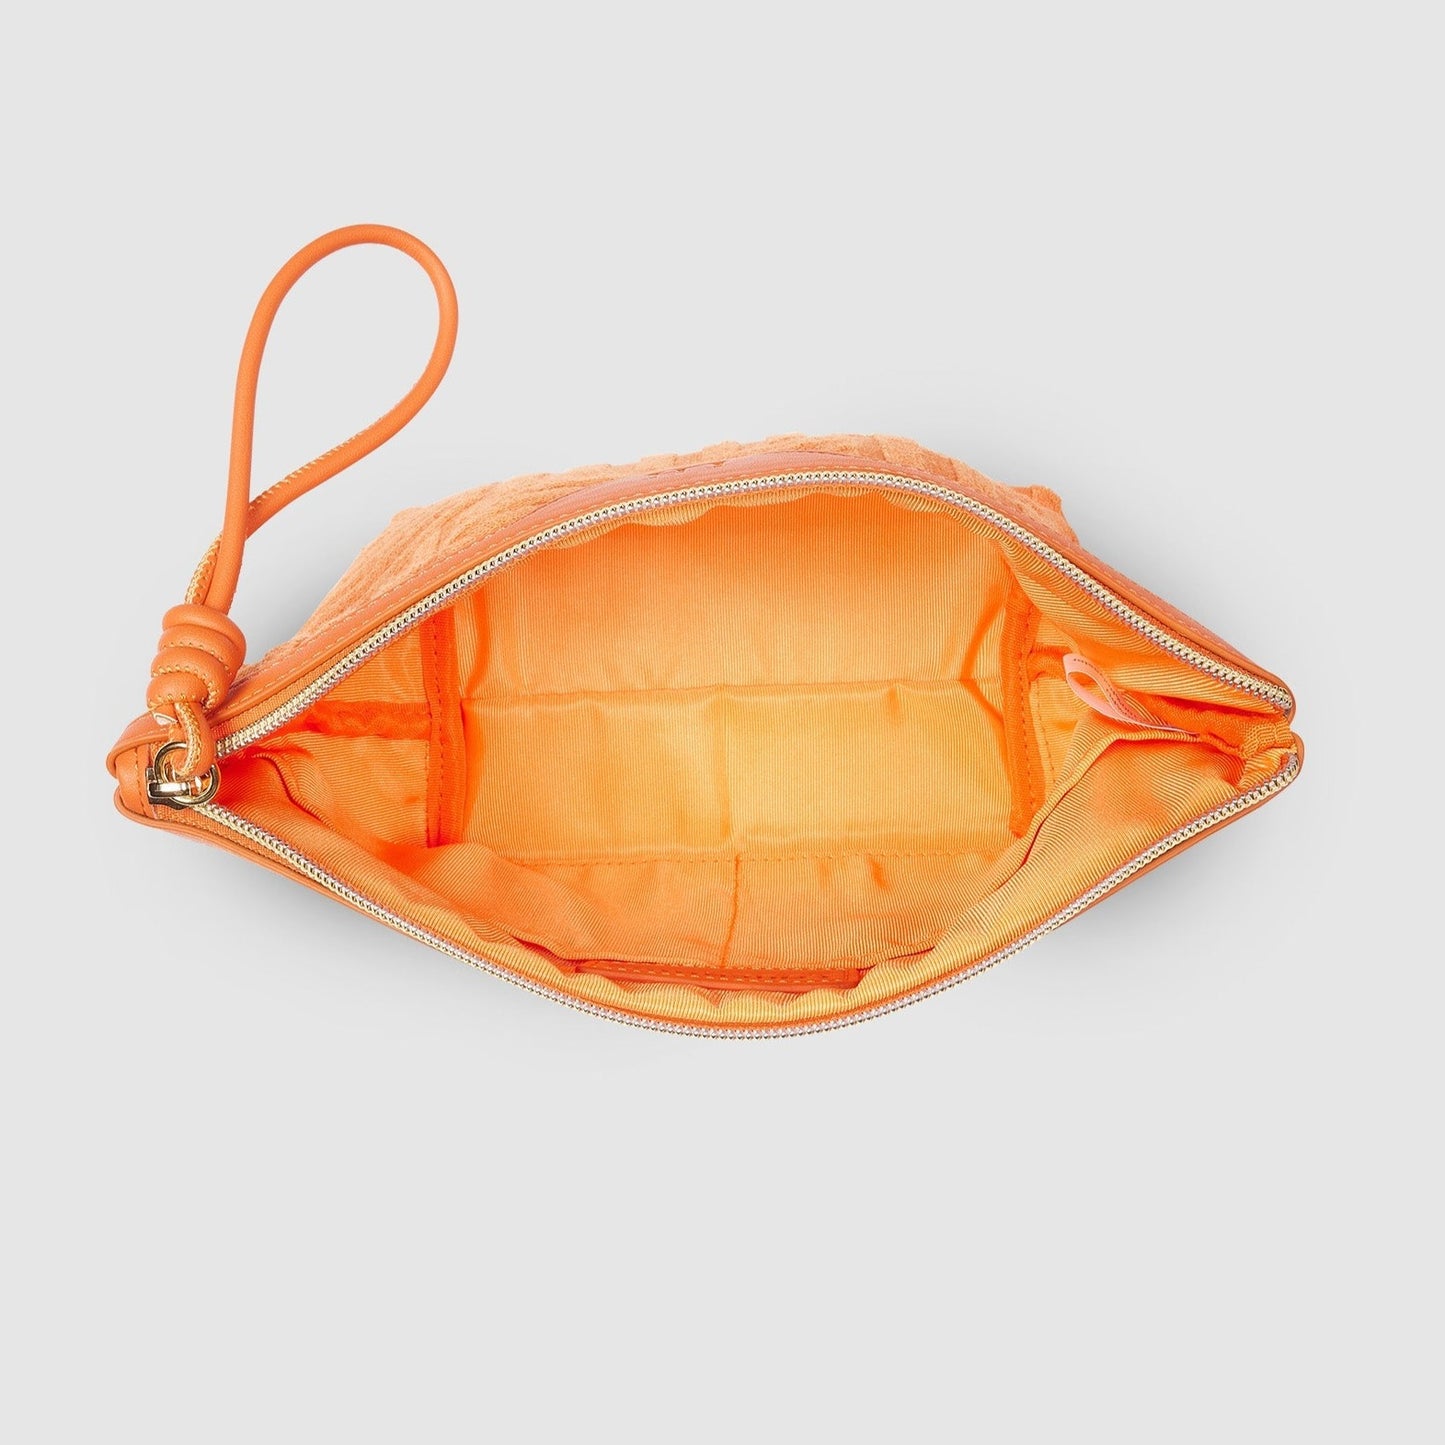 Orange cosmetic bag inside